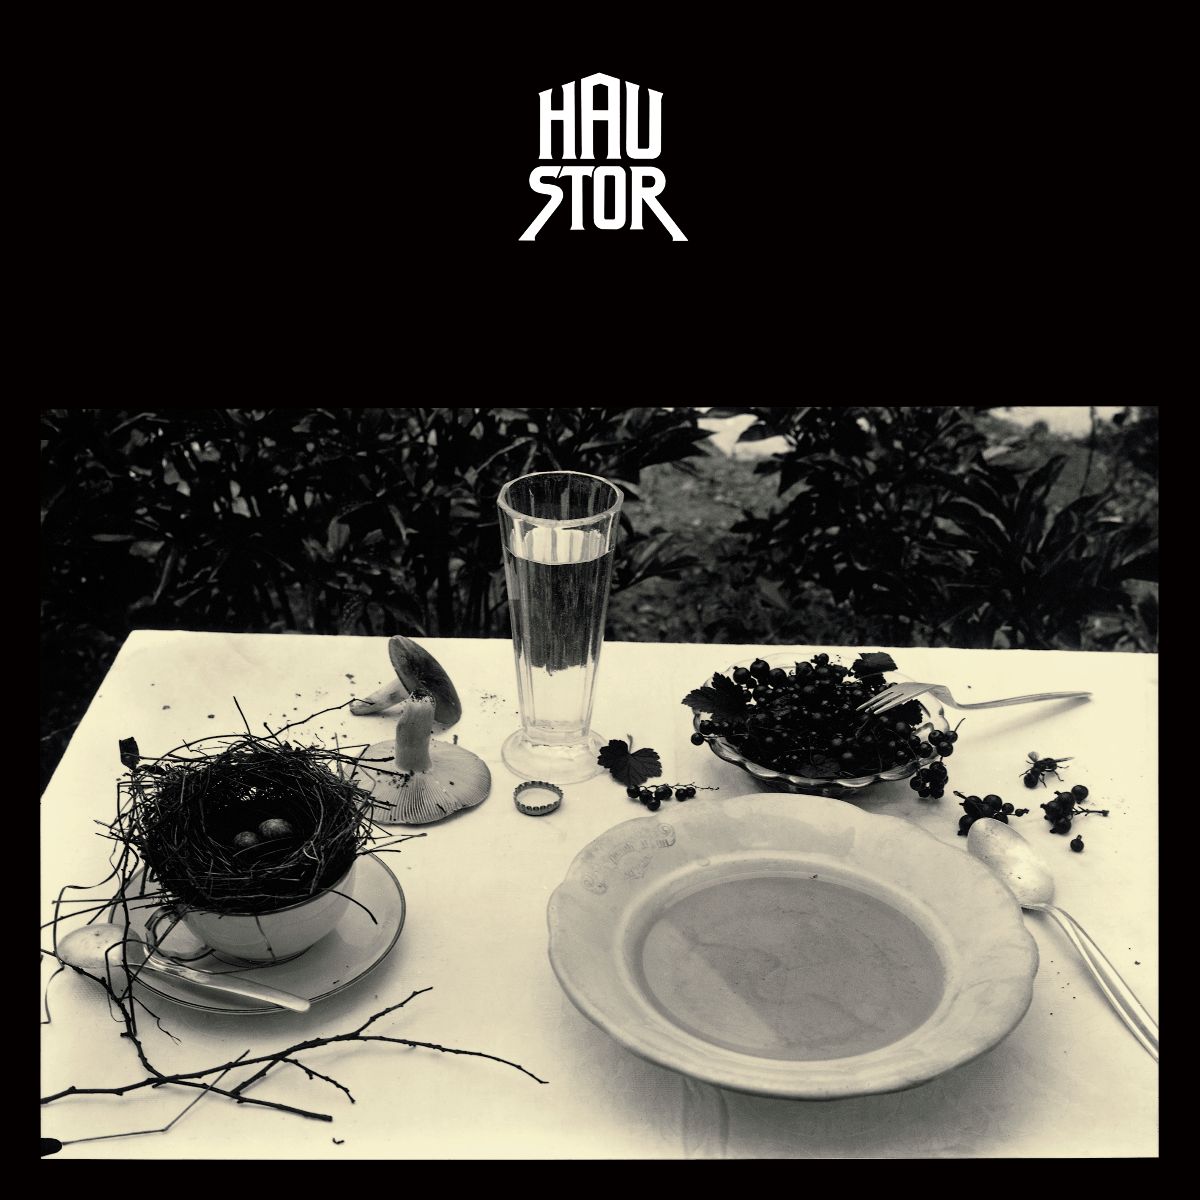 Objavljeno luksuzno vinilno reizdanje prvog albuma Haustora